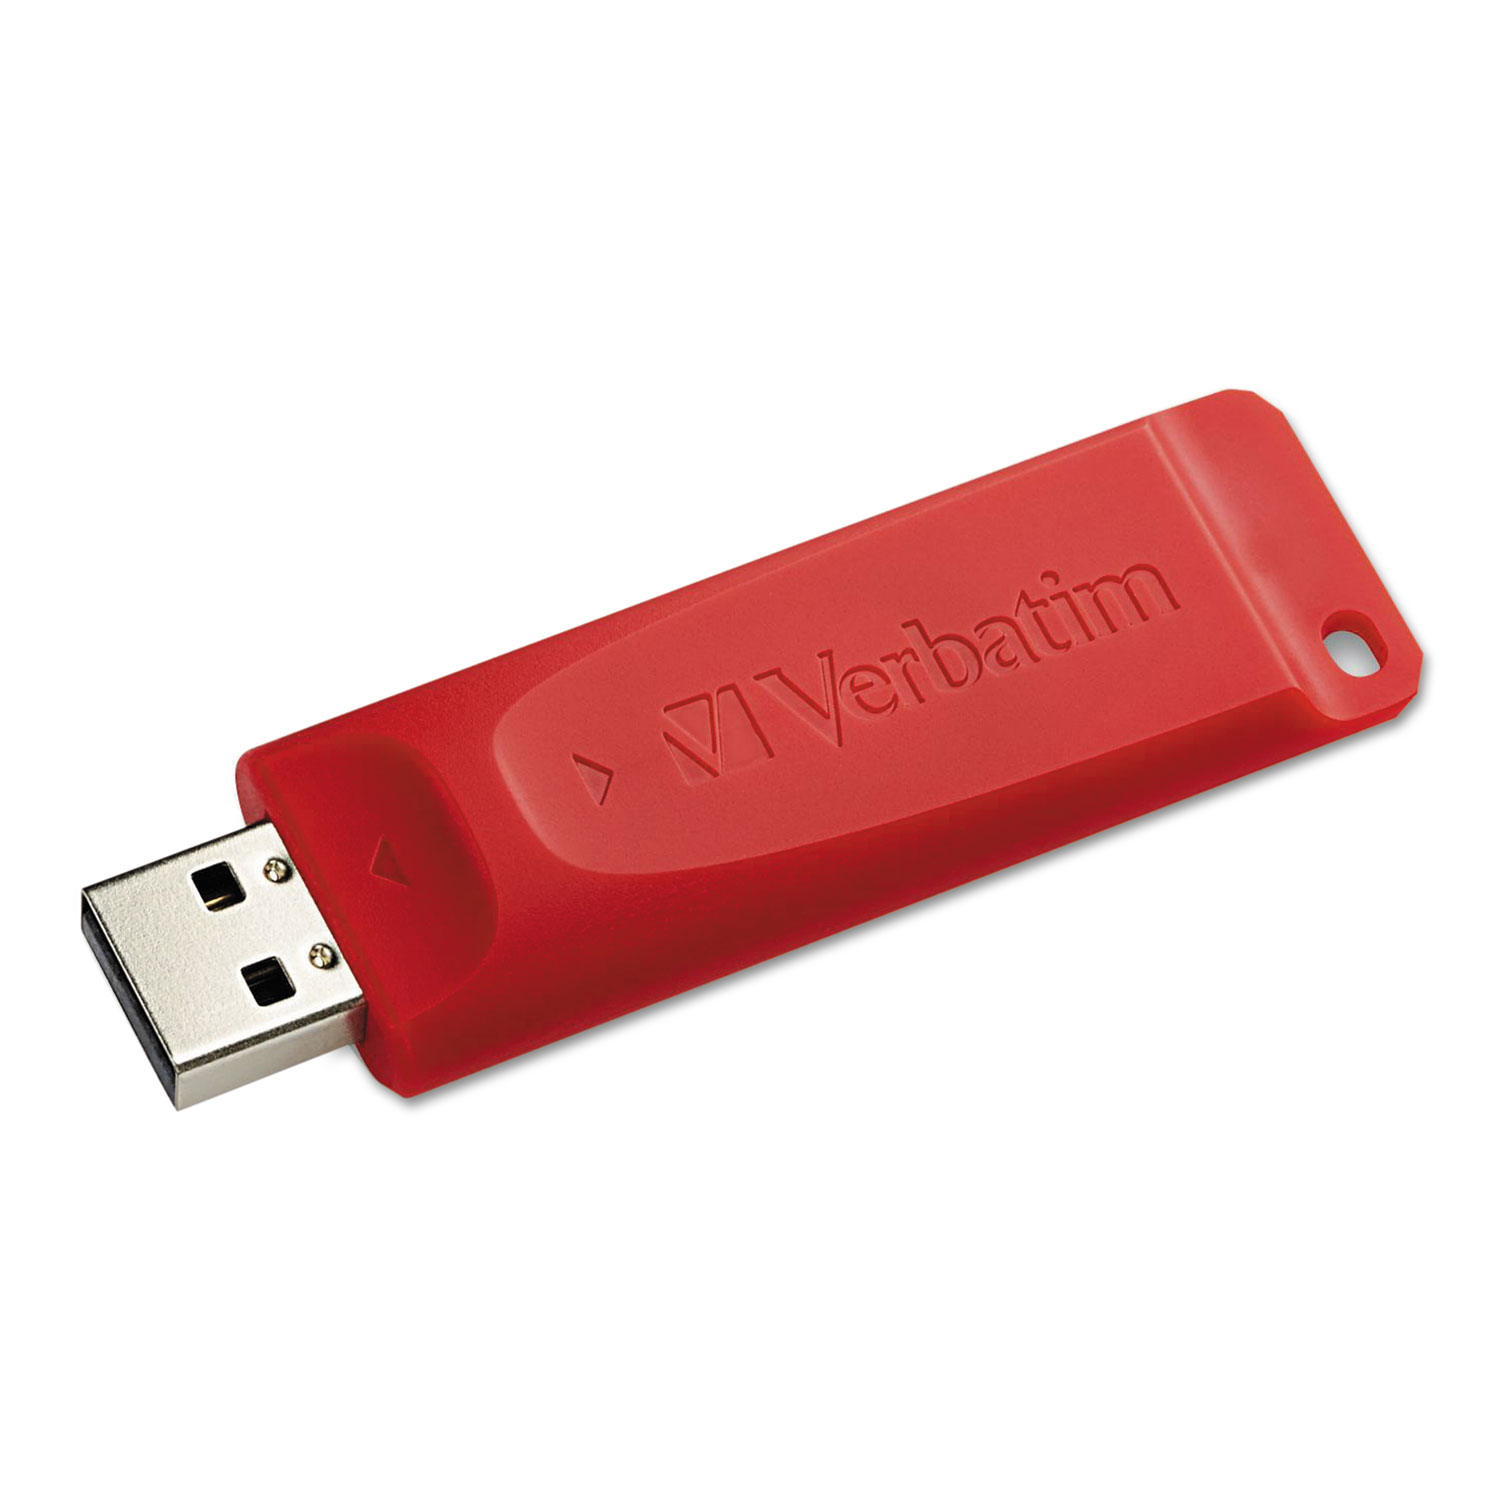 Store n Go USB 2.0 Flash Drive, 128GB, Red